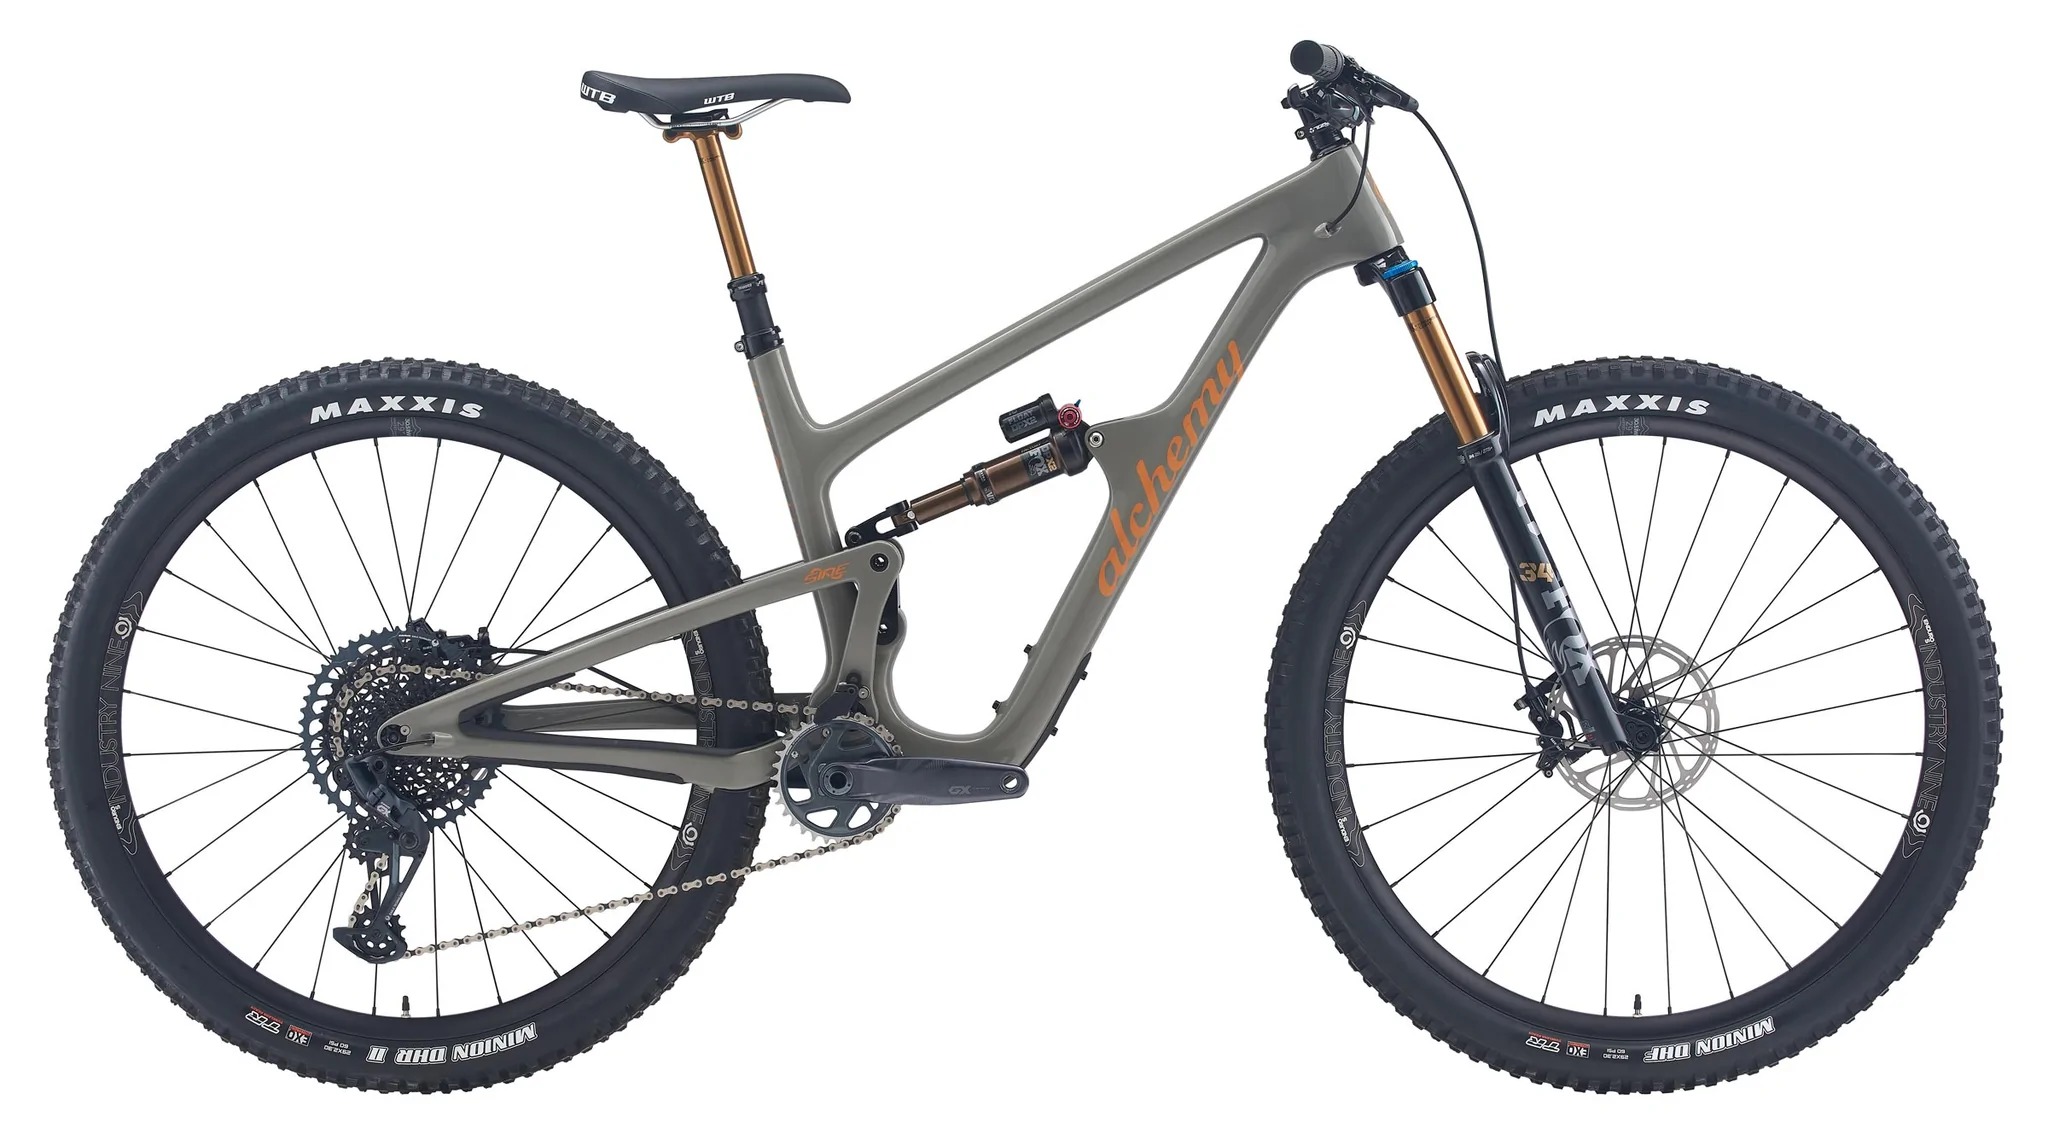 Alchemy Arktos 120 Mountain Bike - Carbon Frame, Dropper Post, GX, Fox Factory $4199 Shipped